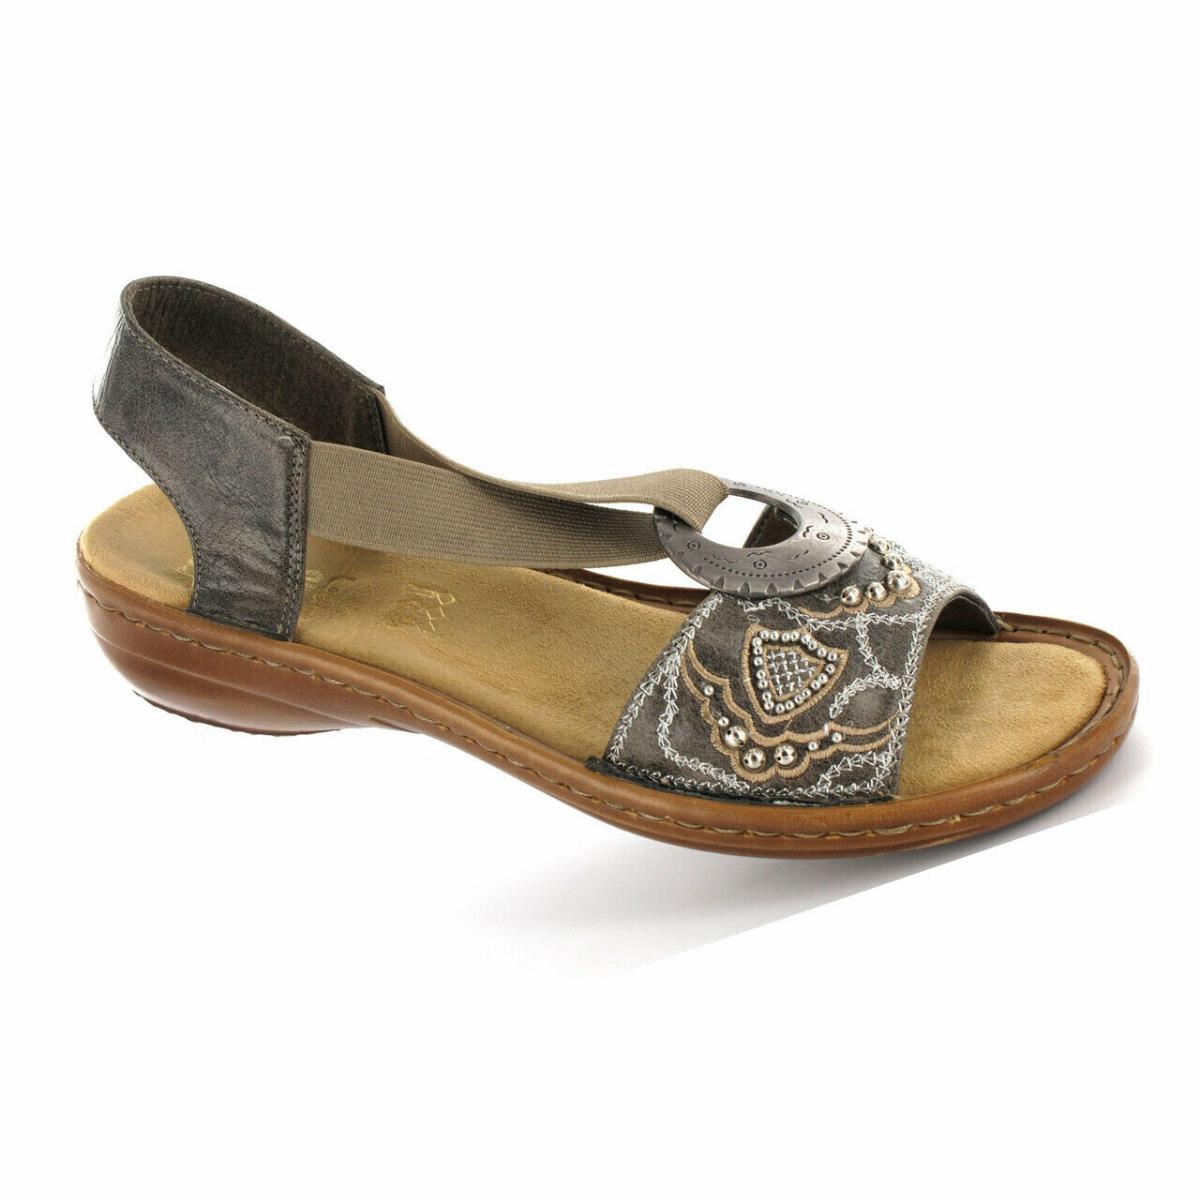 Rieker Regina Women`s Brown Size 9.5 US 41 EU Sandals Shoes